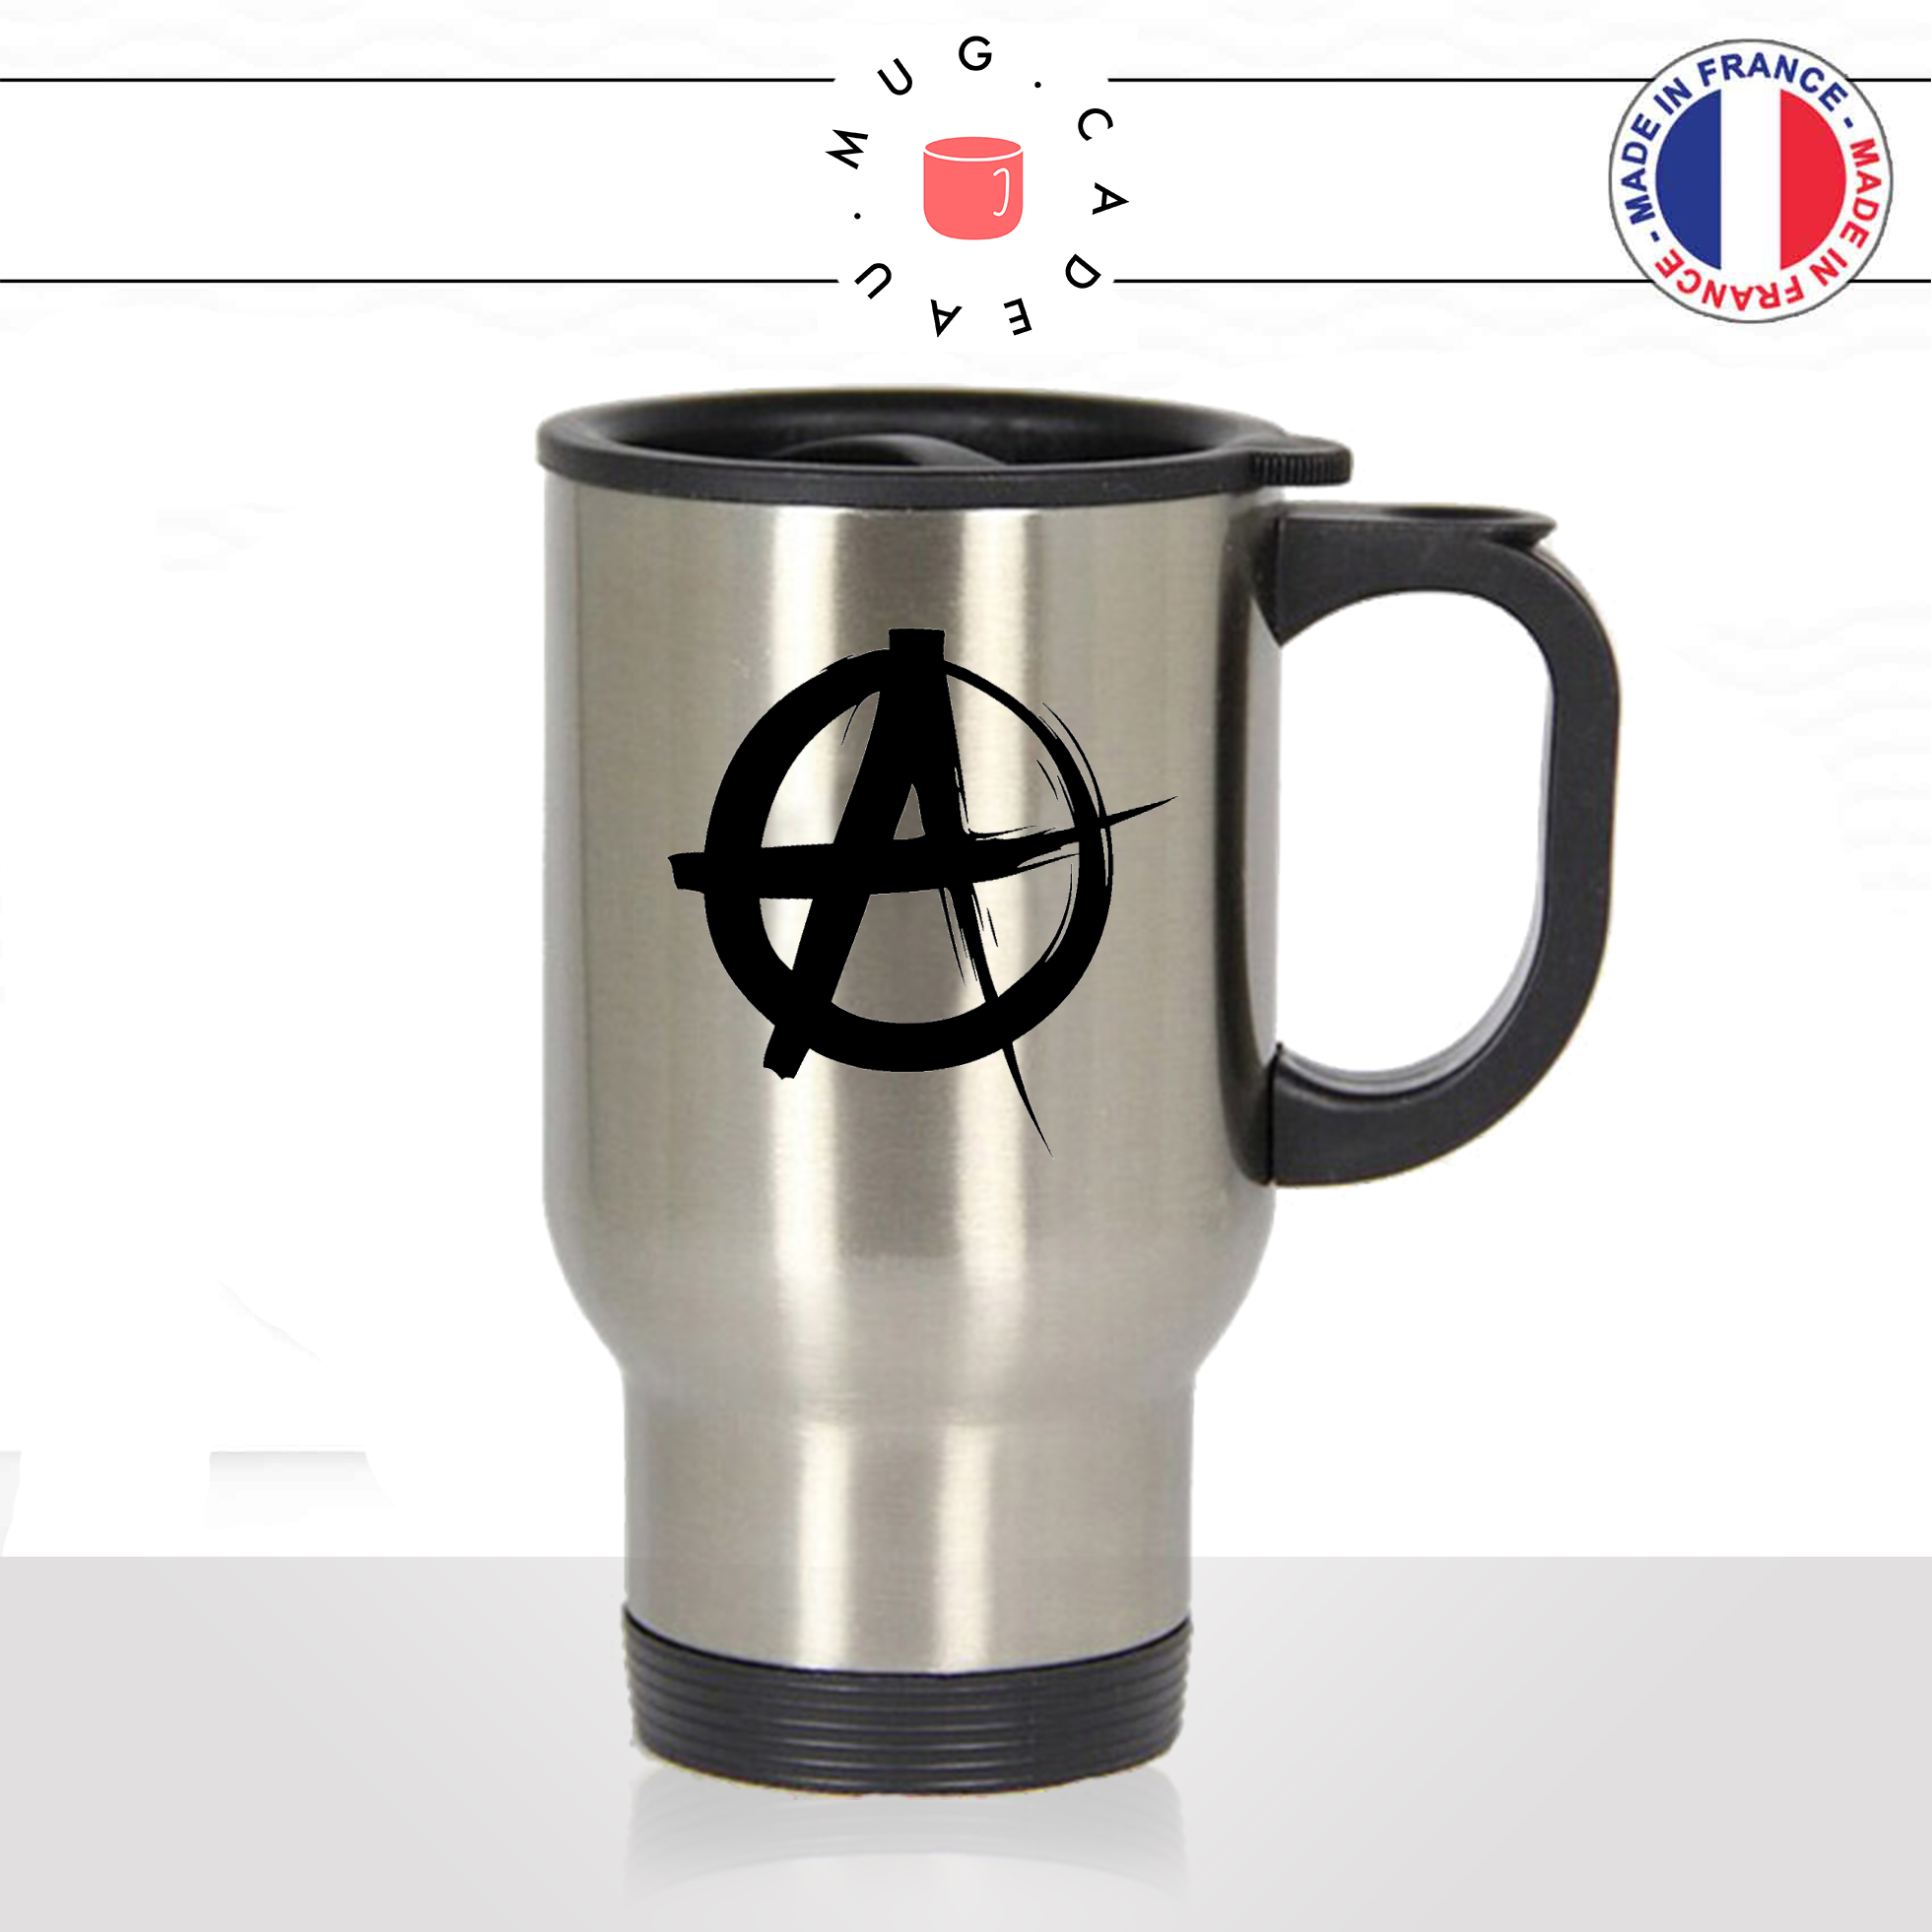 mug-tasse-voyage-thermos-chaud-idée-cadeau-personnalisé-anarchie-anarchiste-anarchy-a-politique-anti-fa-offrir-original-fun-2